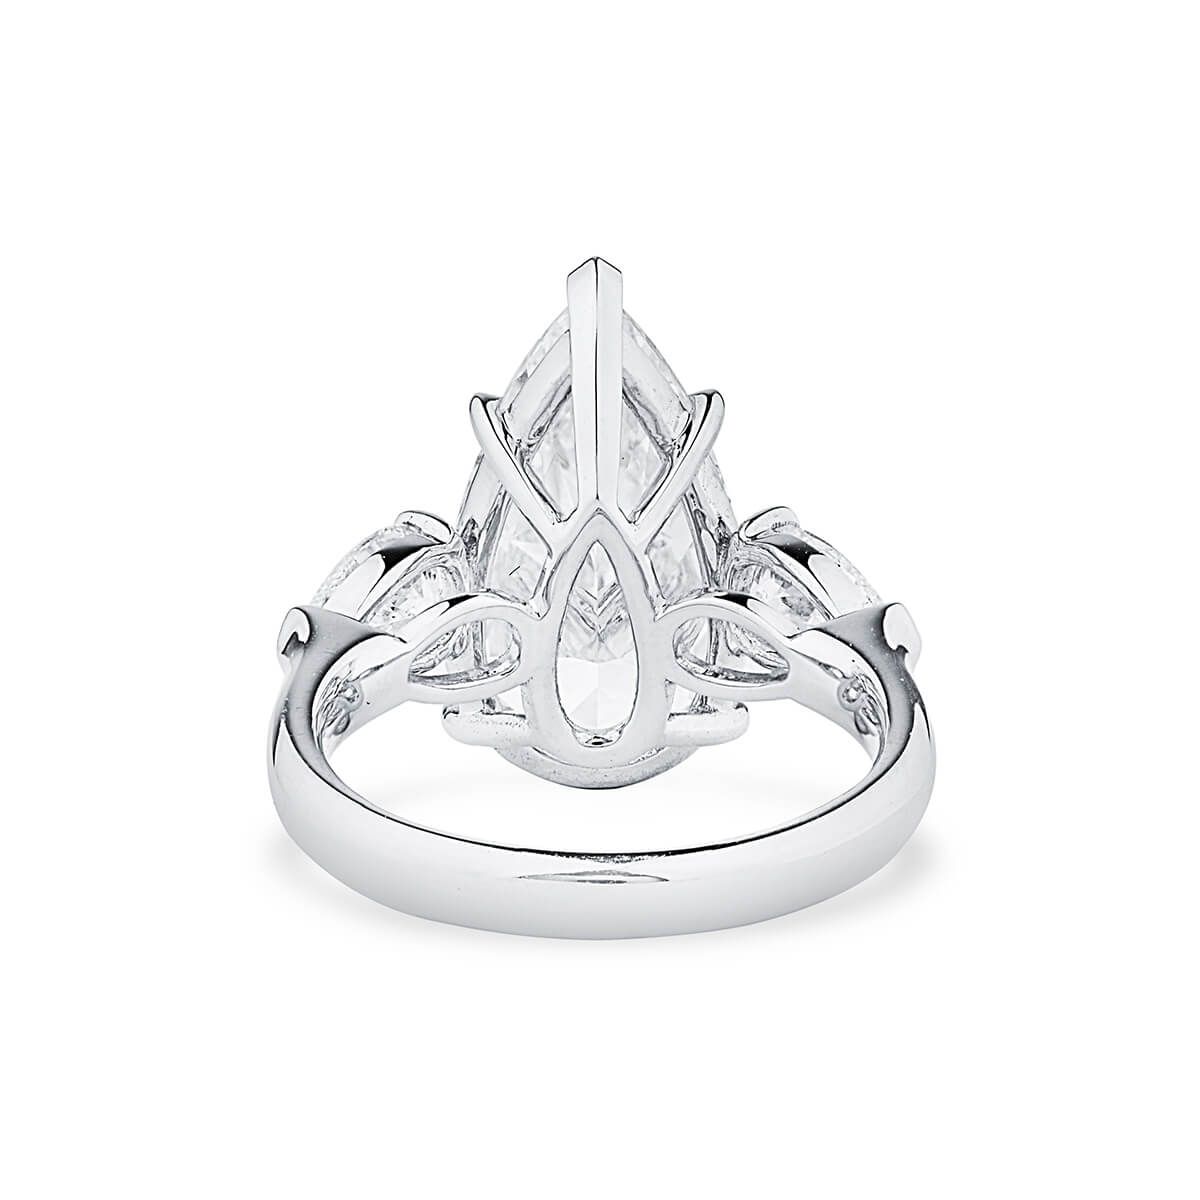  White Diamond Ring, 5.03 Ct. (6.03 Ct. TW), Pear shape, GIA Certified, 5192045633